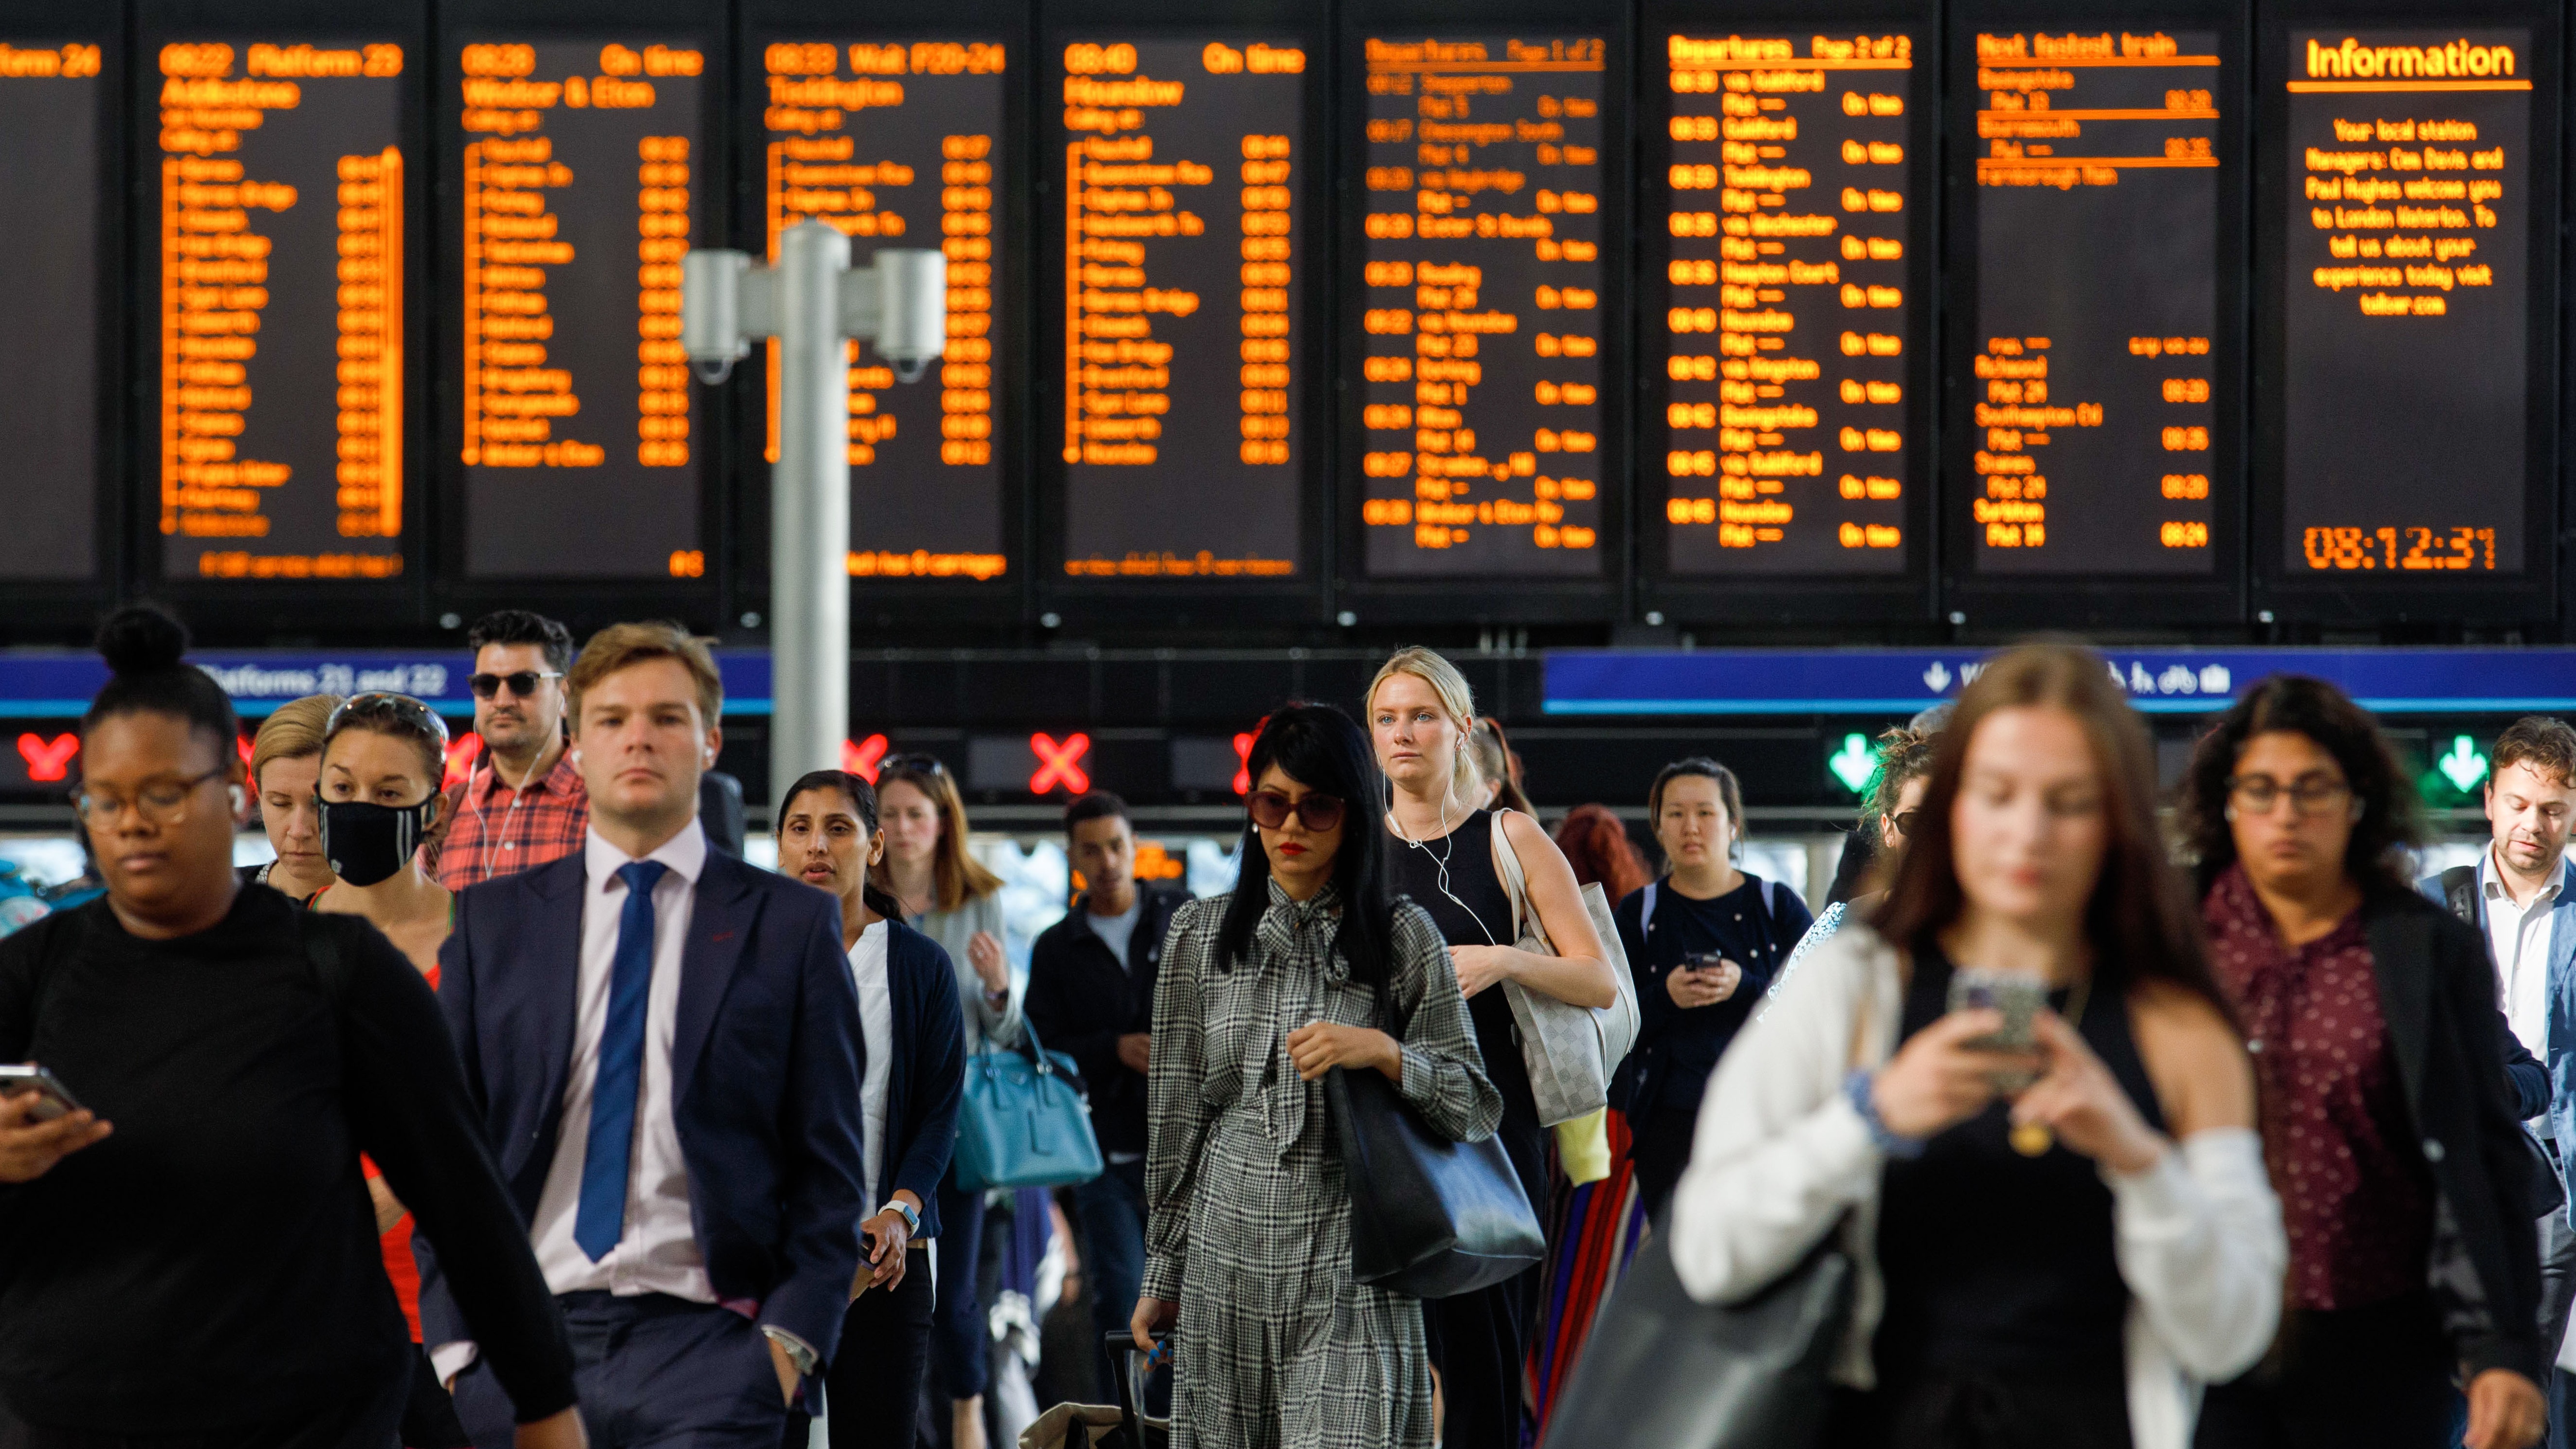 Commuters ahead of rail strike